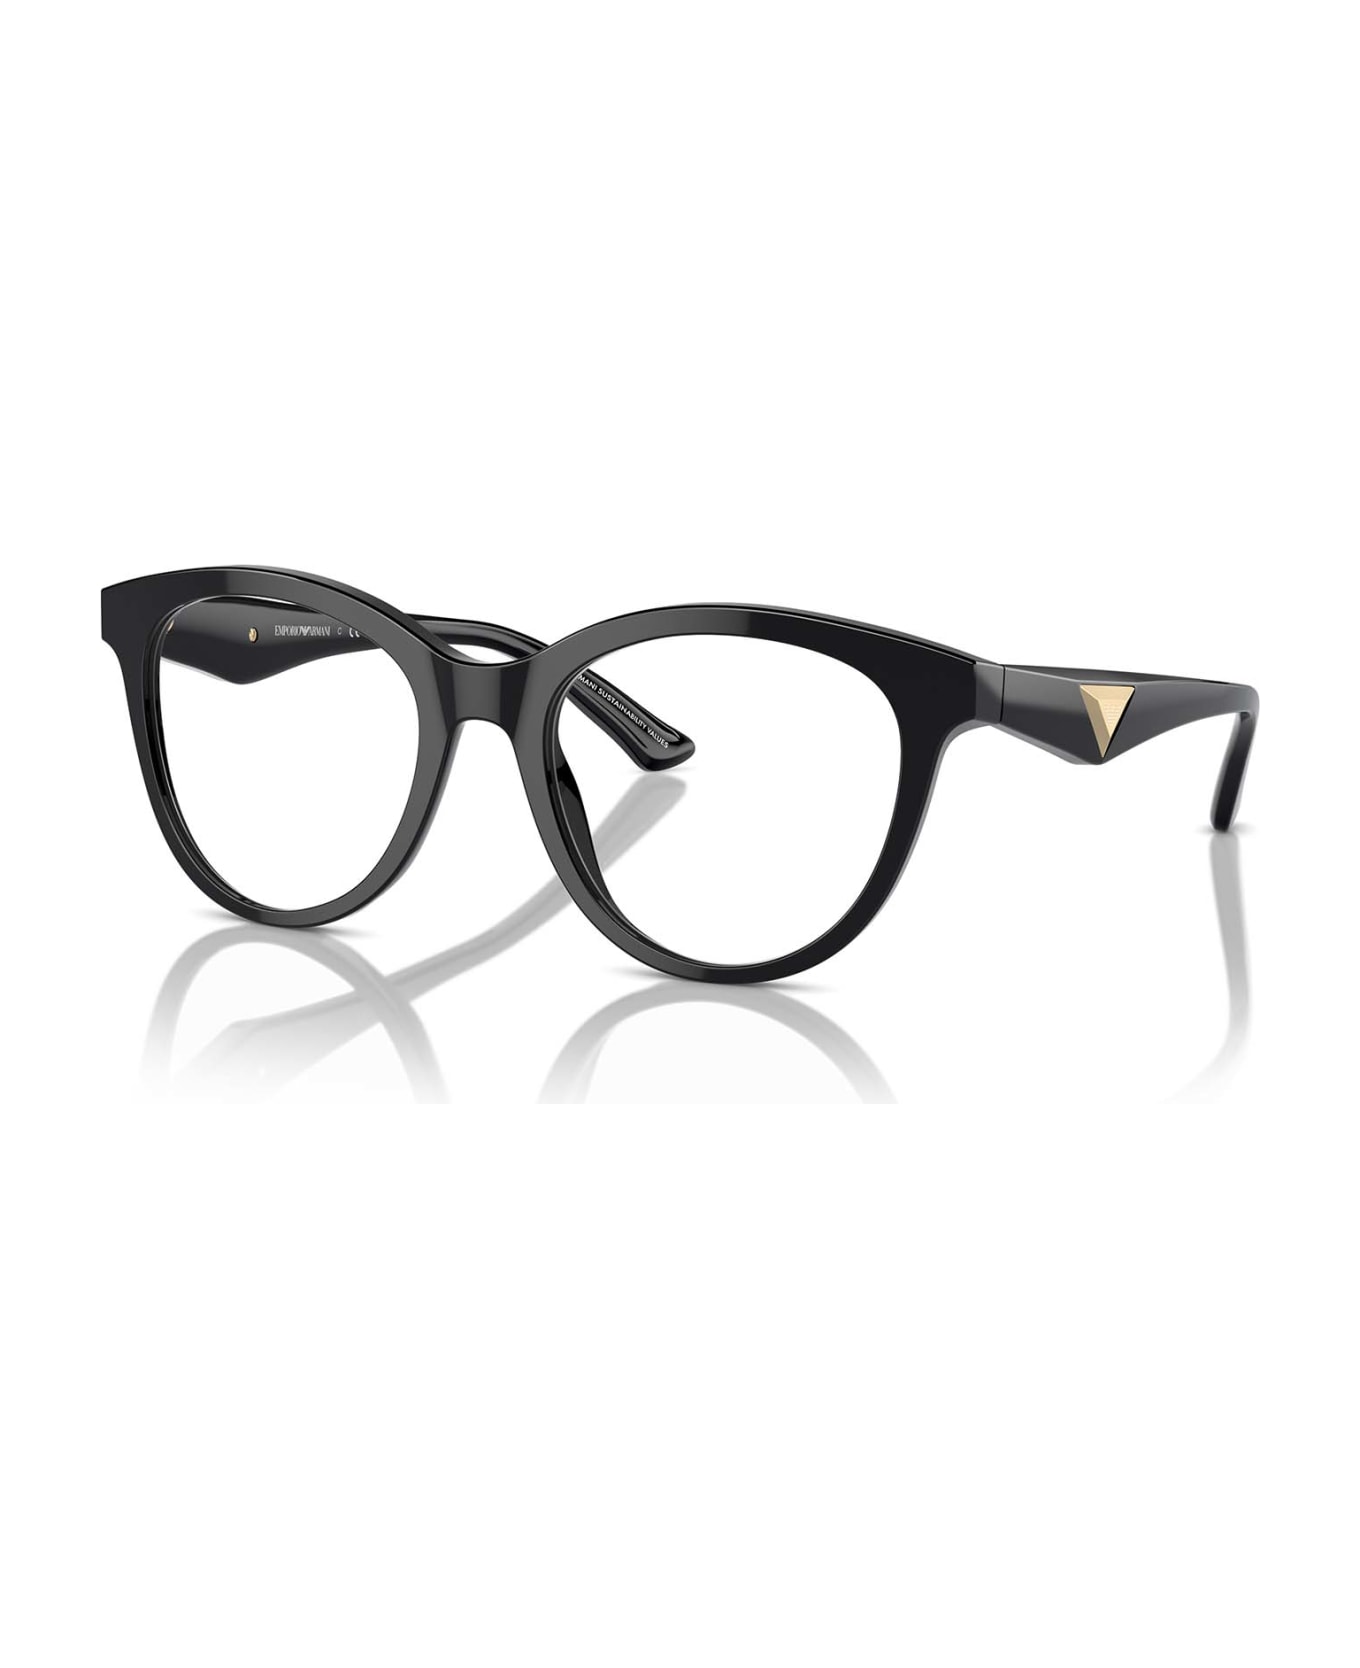 Emporio Armani Ea3236 Shiny Black Glasses - Shiny Black